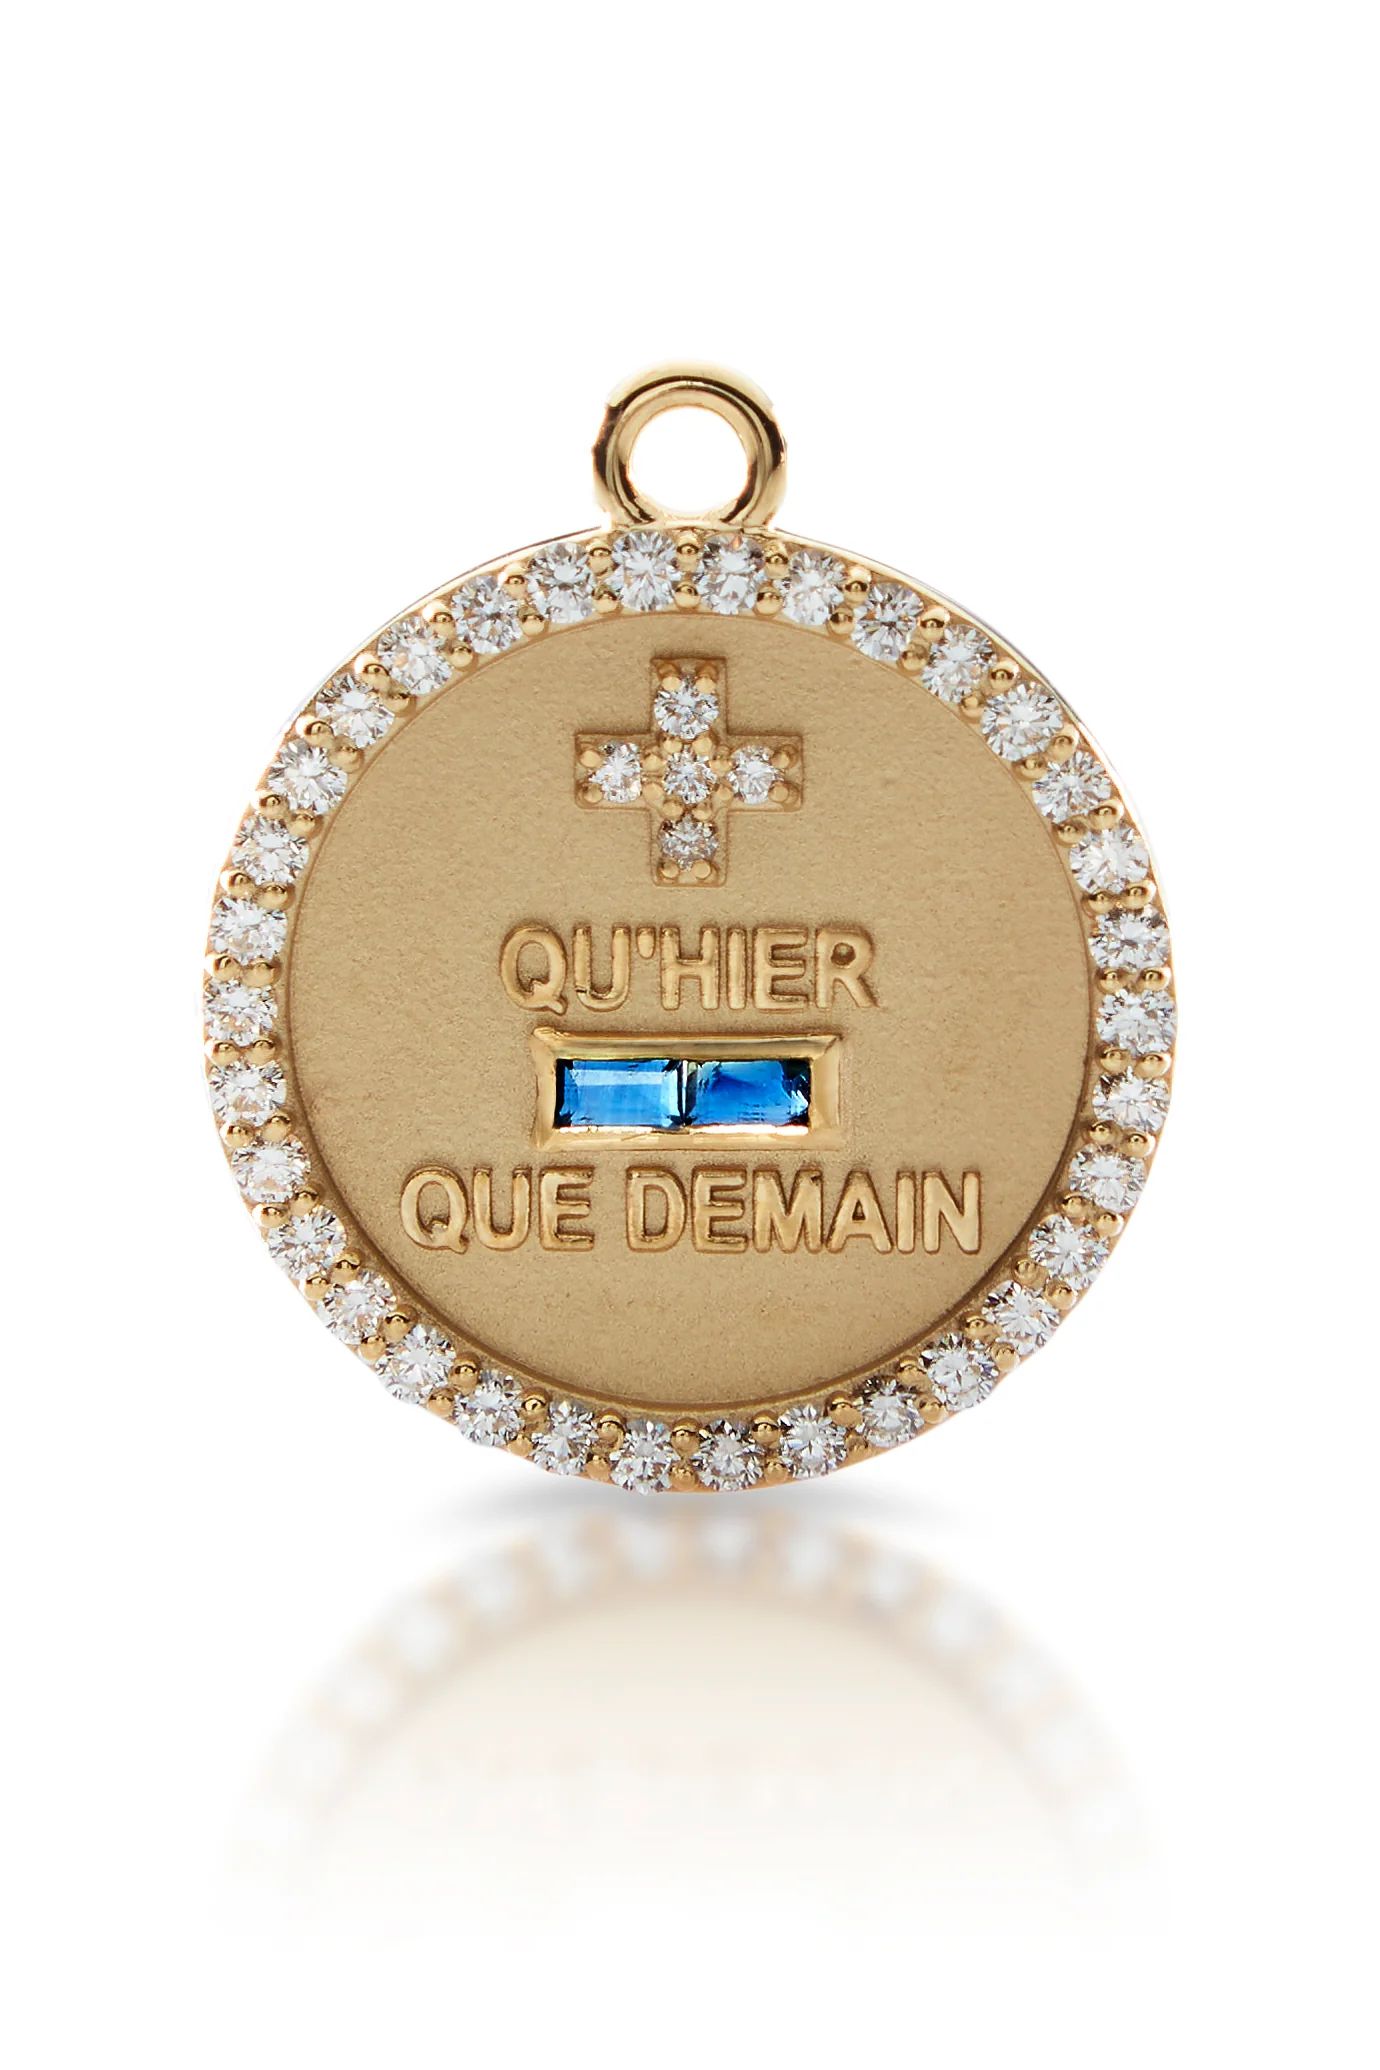 18KY Blue Sapphire and Diamond Qu'Hier Que Demain Love Token | Susan Saffron Jewelry